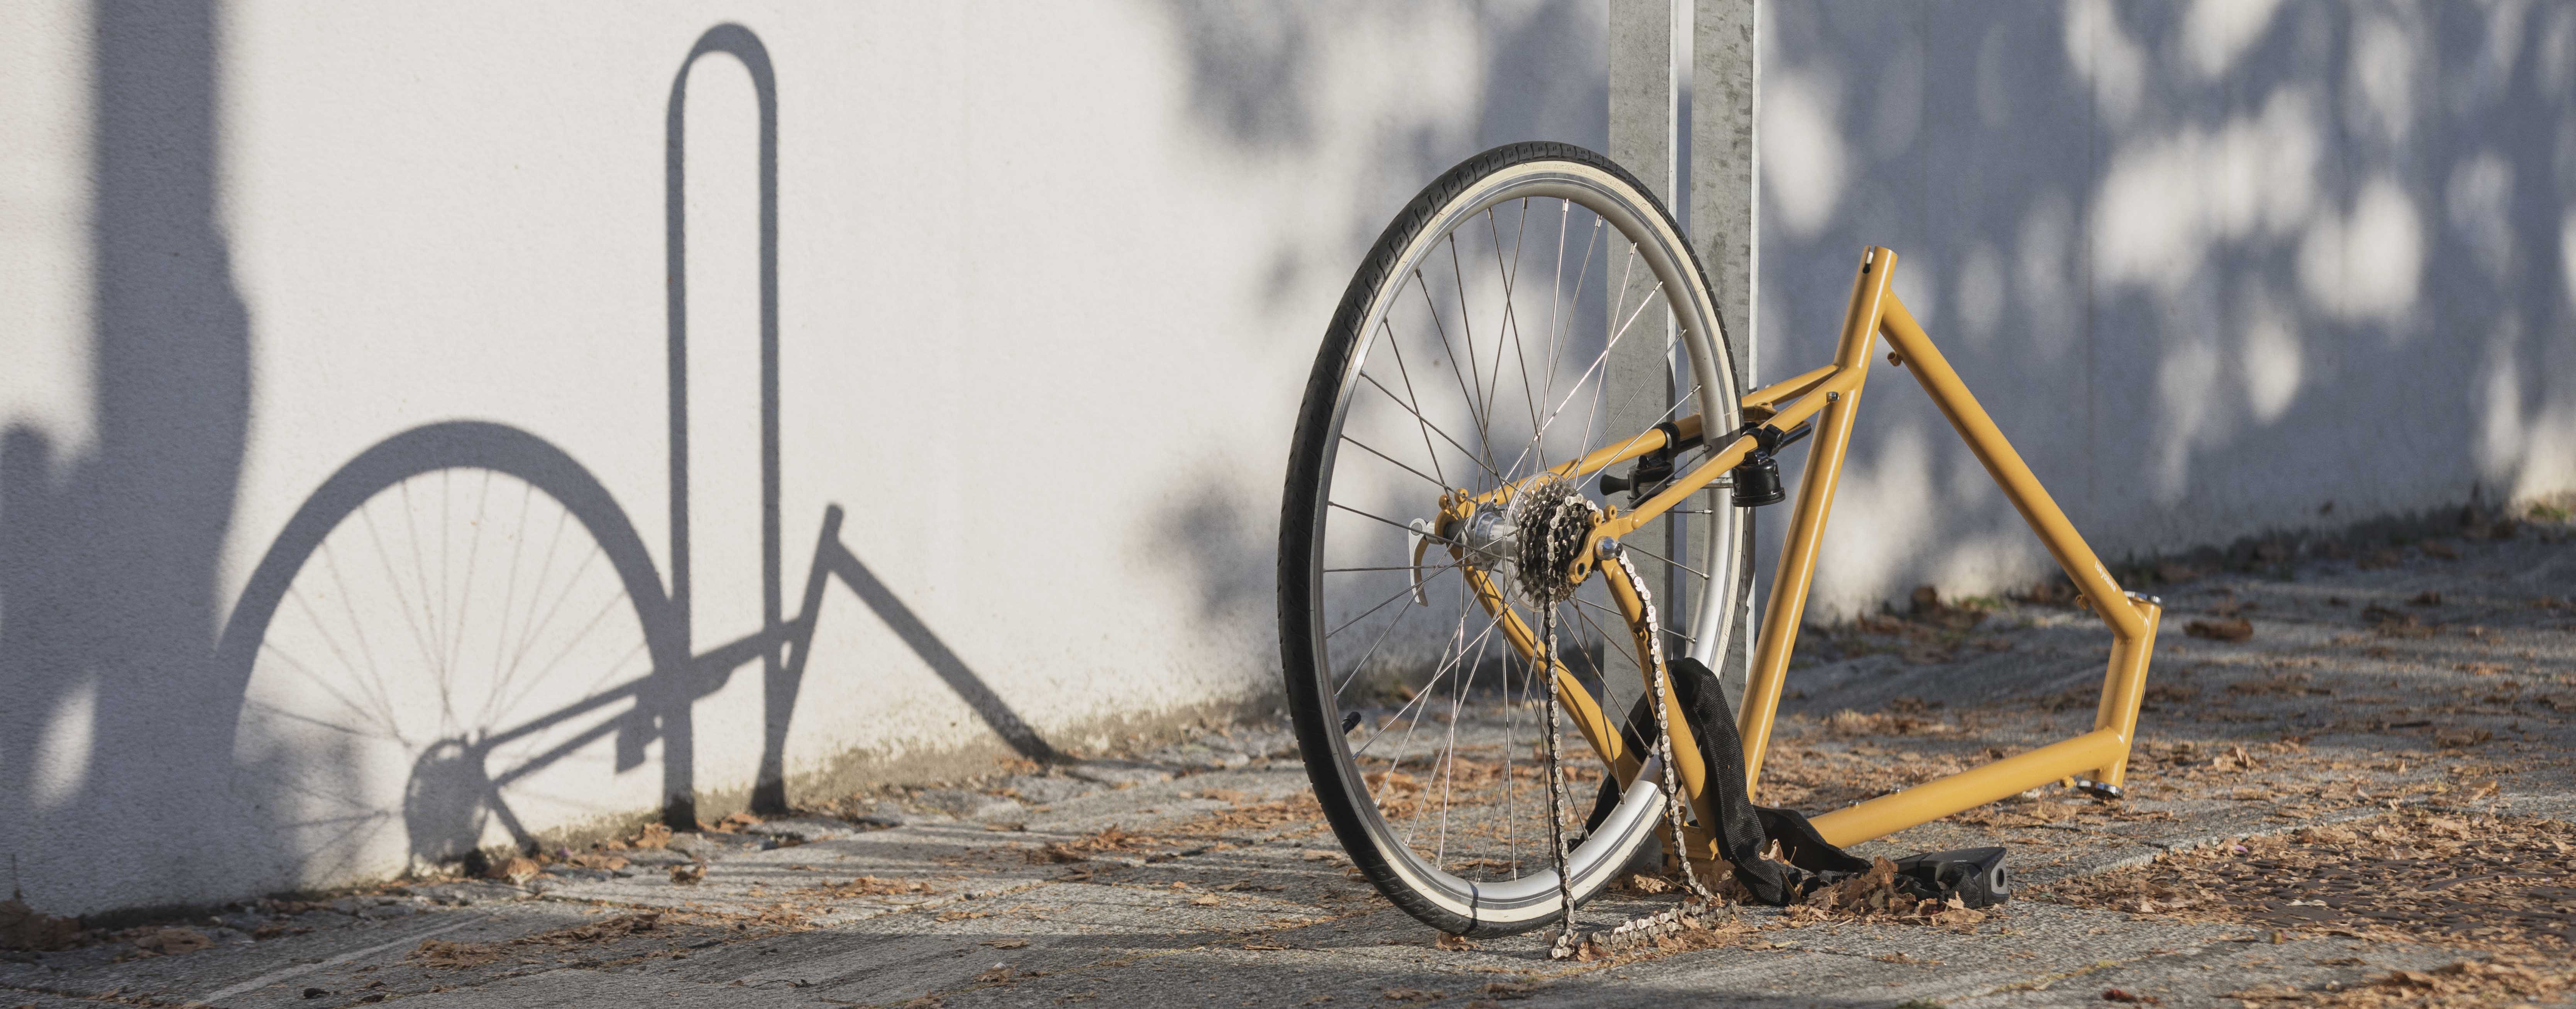 Cykelforsikring Er din cykel forsikret? | Topdanmark